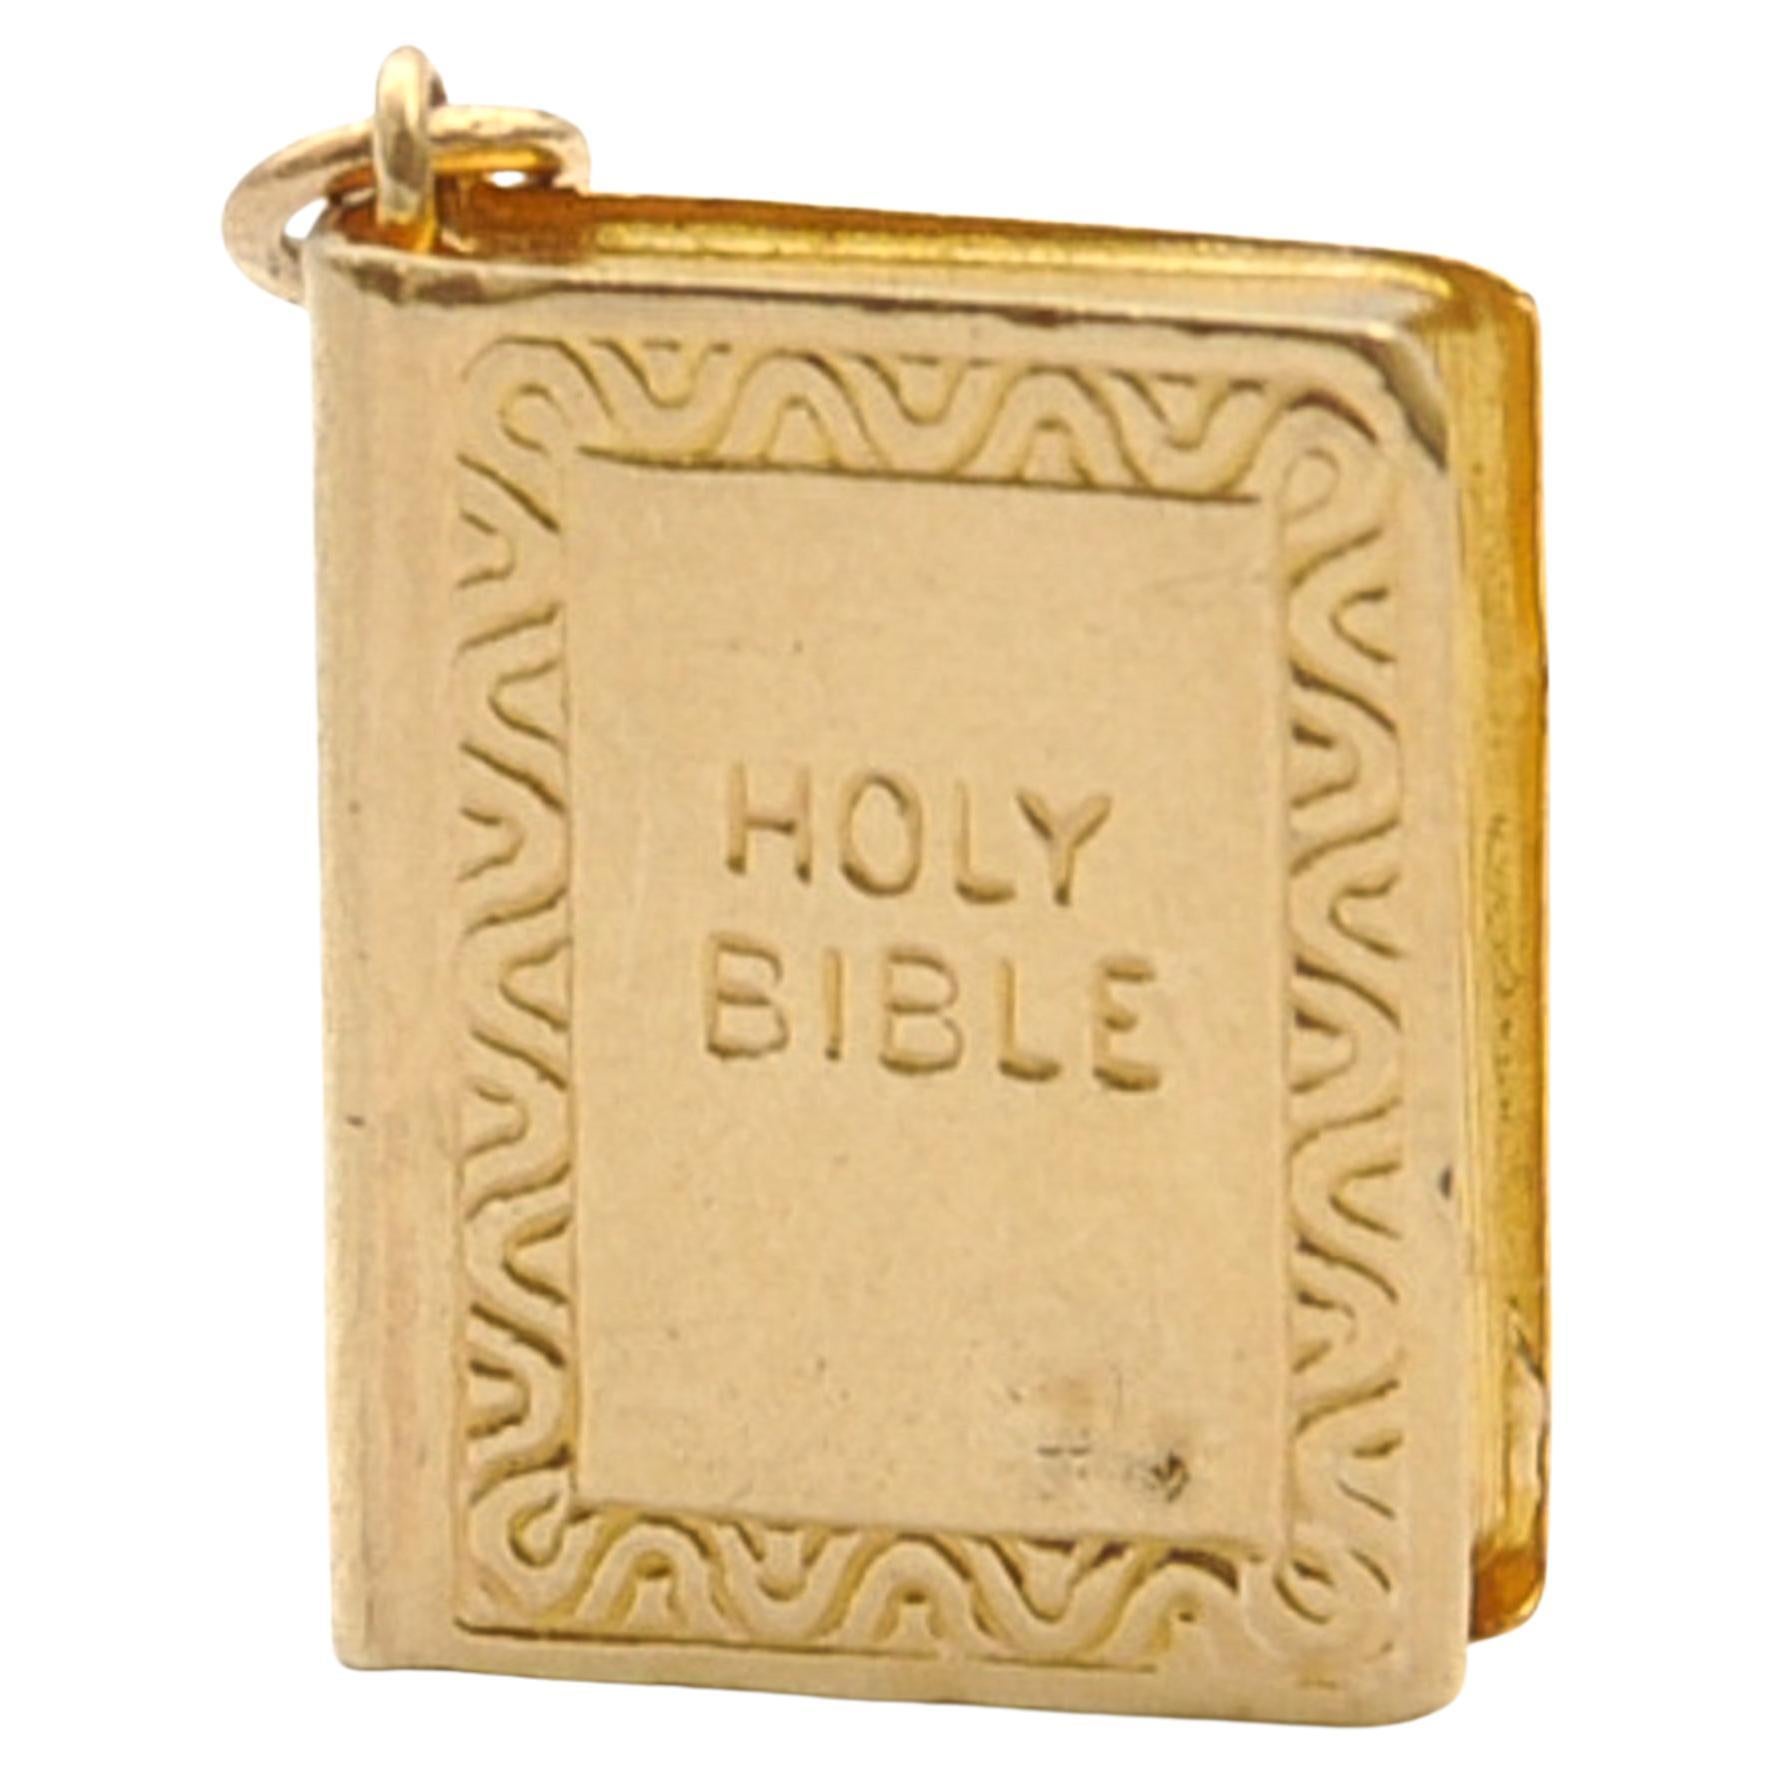 Vintage 9K Gold Holy Bible Biblical Charm Pendant